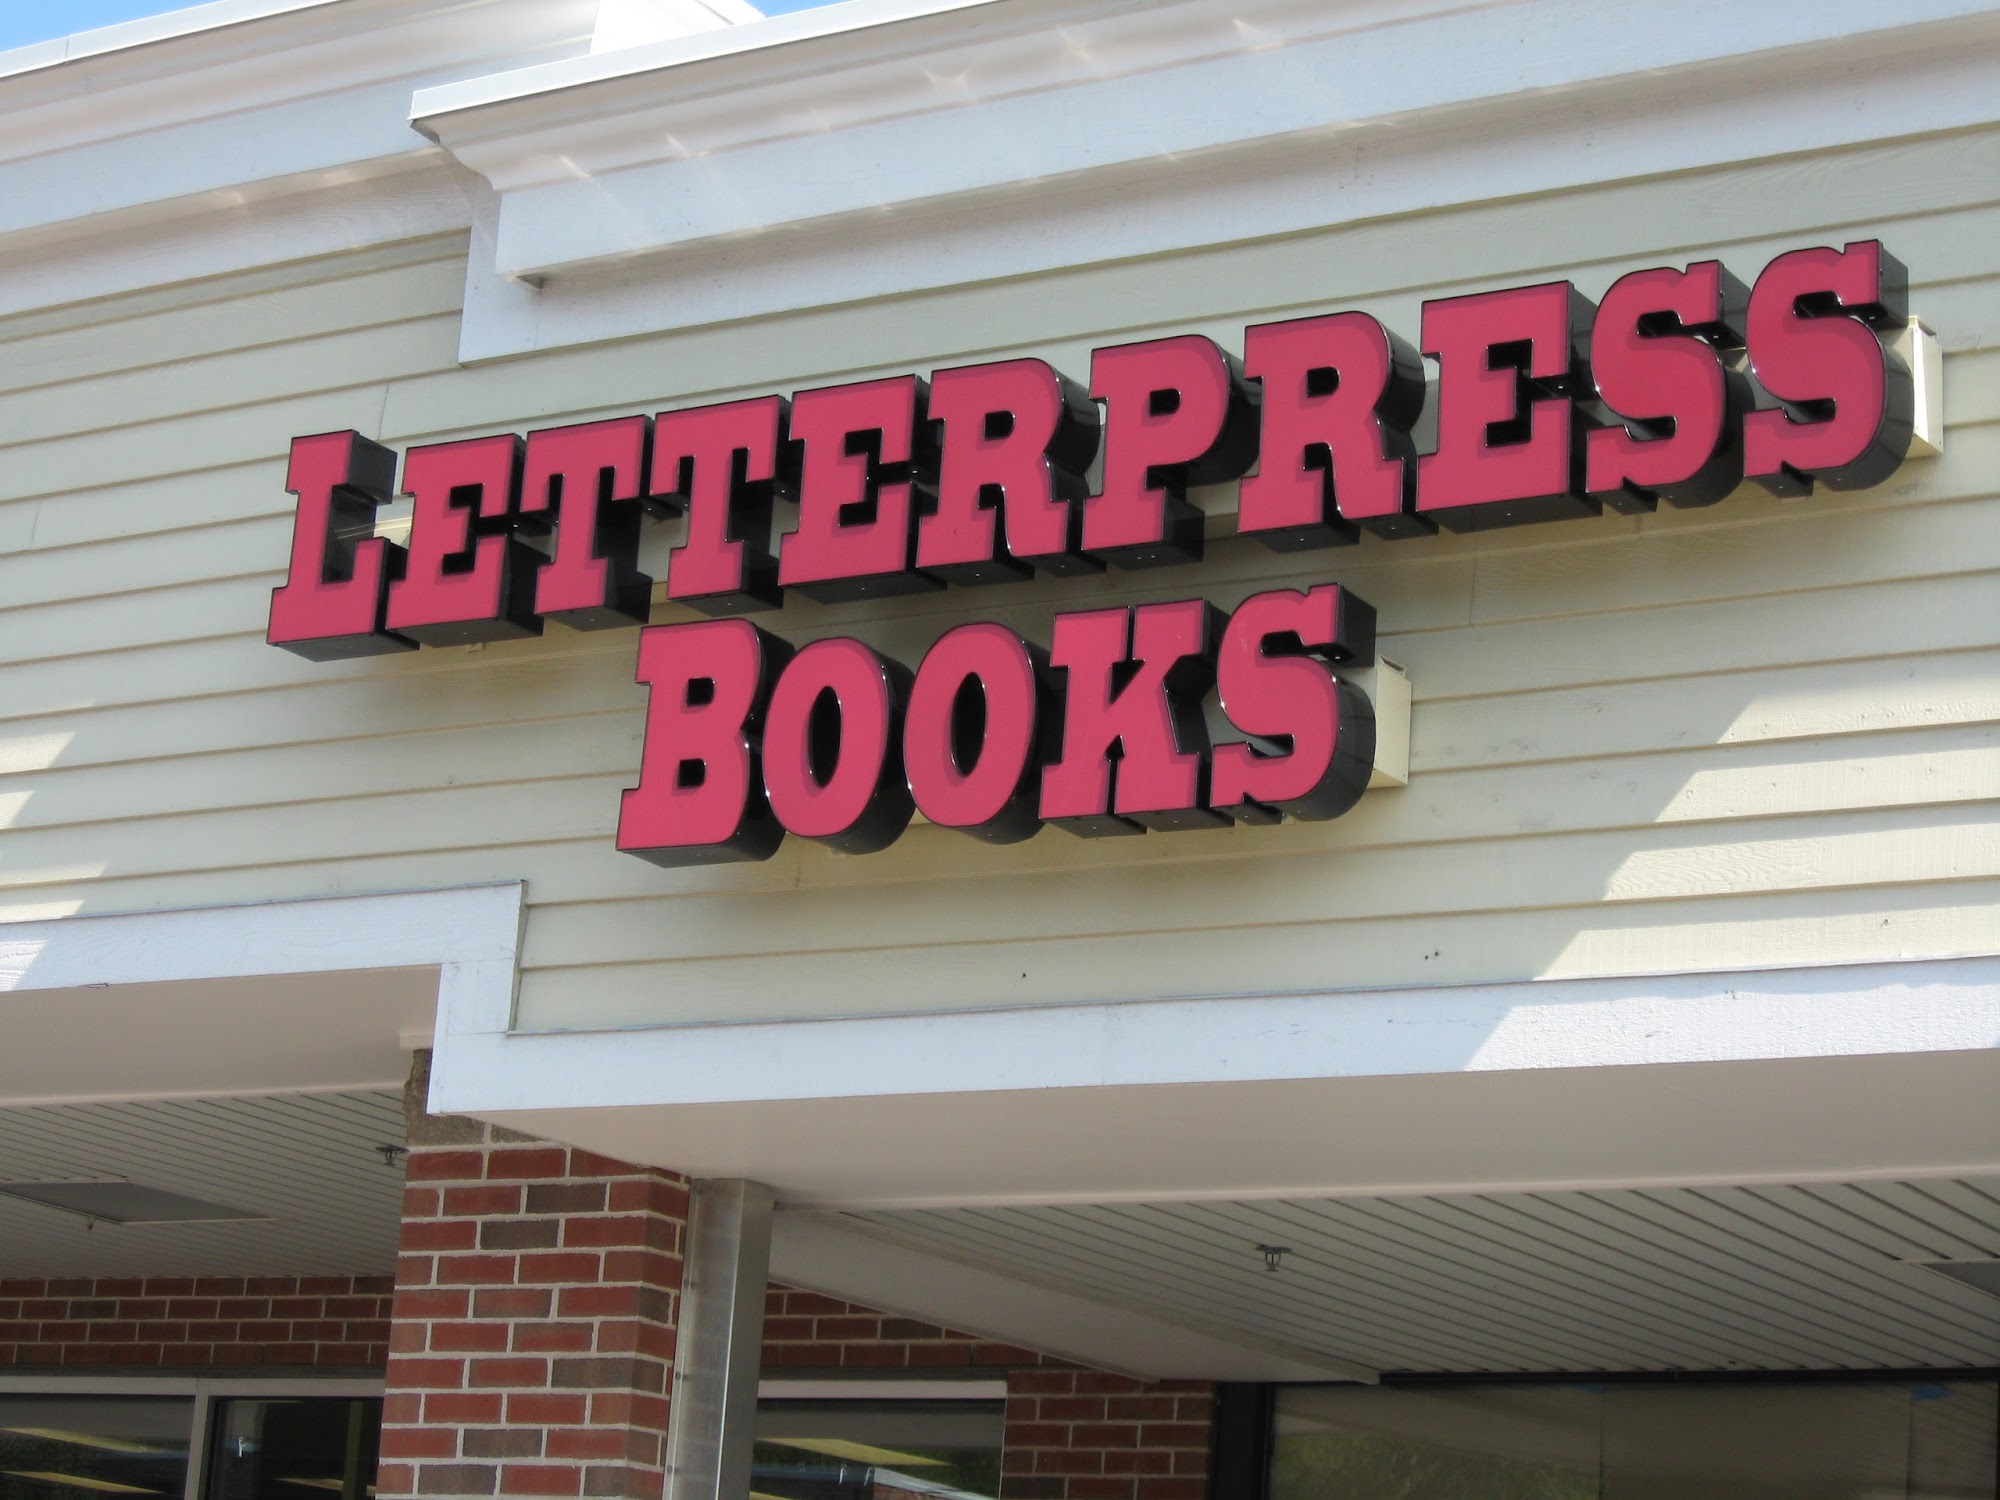 Letterpress Books & Gifts